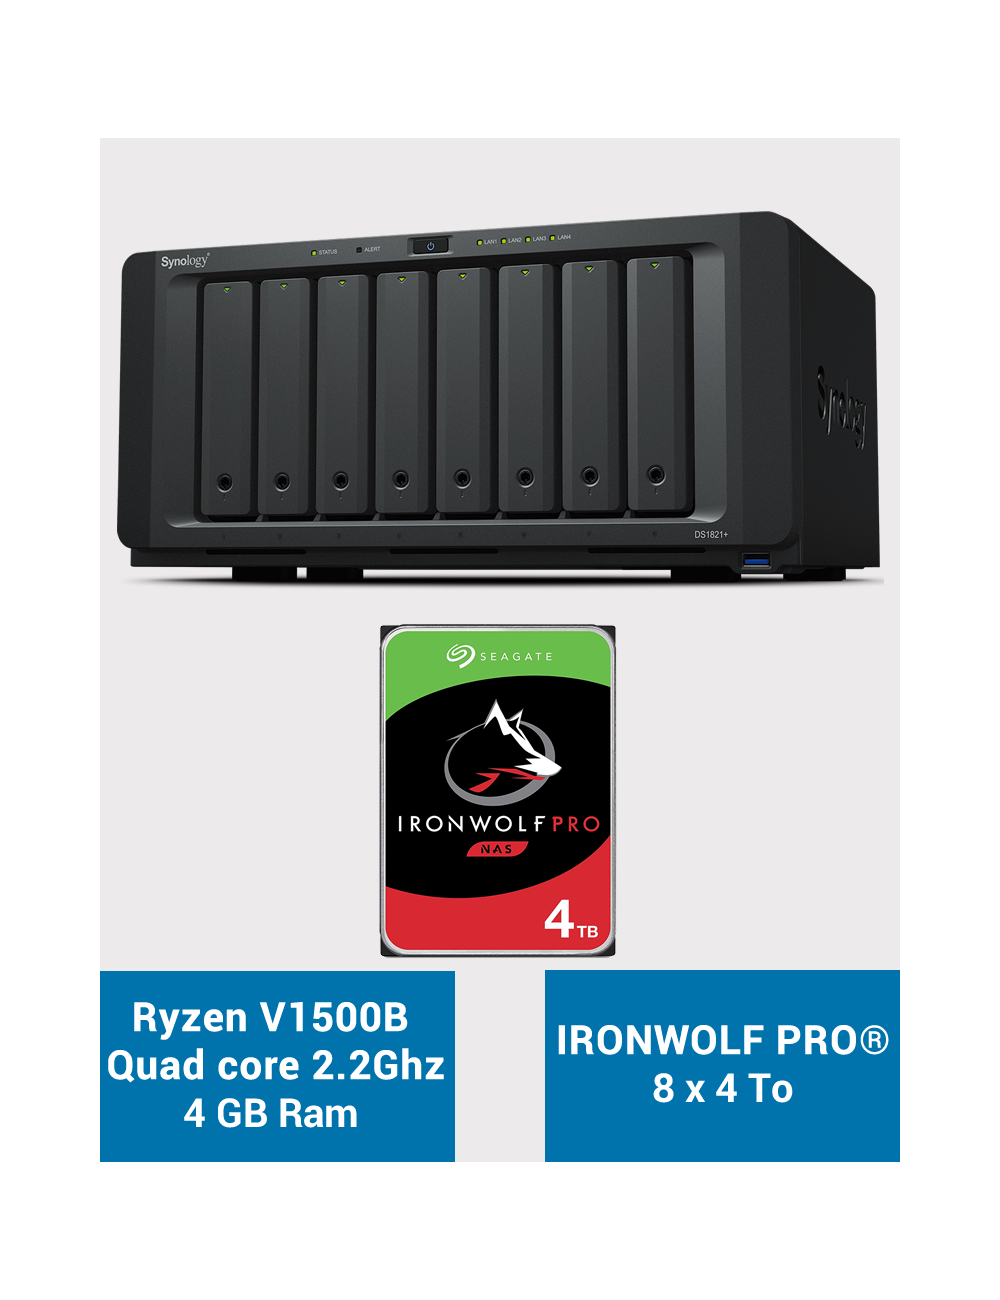 Synology DS1821+ 8-bay NAS Server IRONWOLF PRO 32TB (8x4TB)